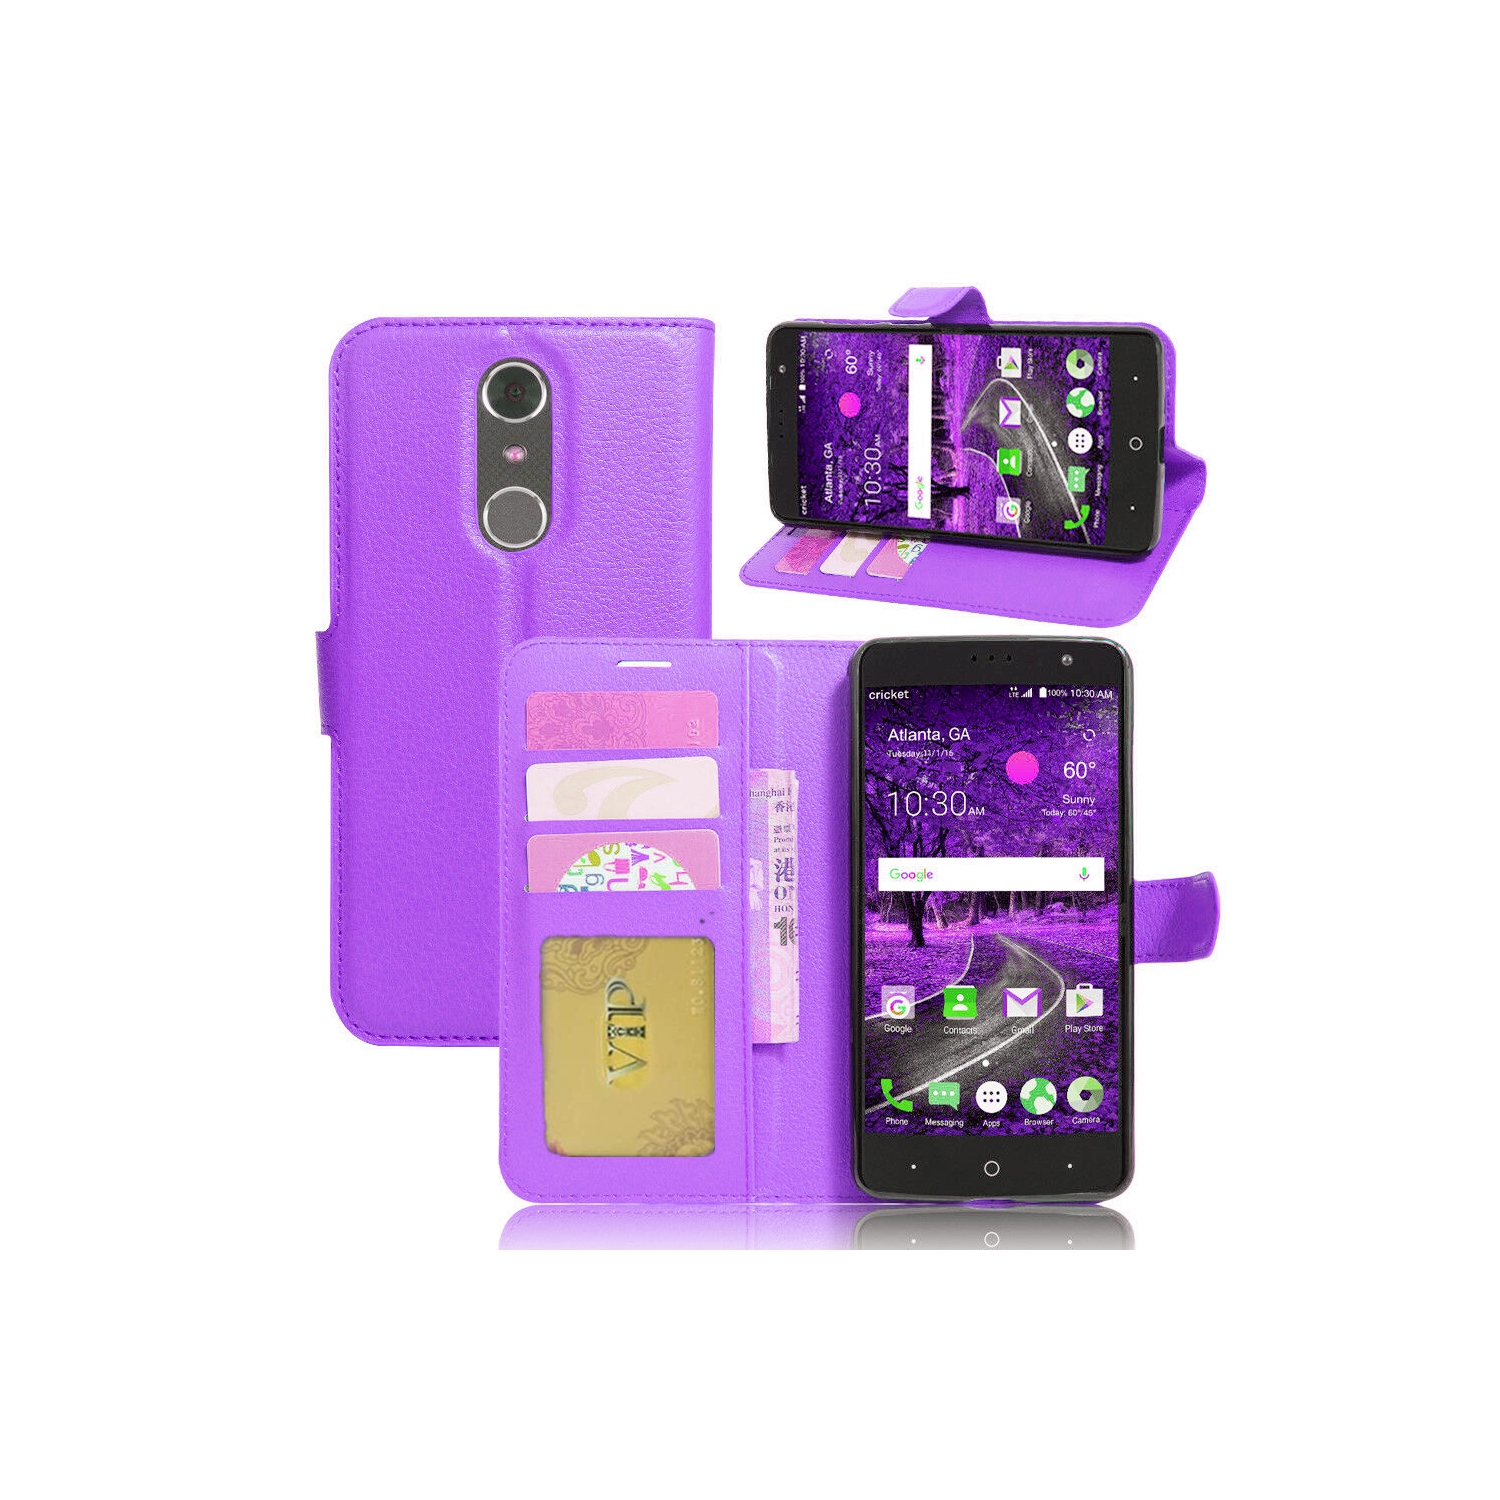 [CS] ZTE Grand X4 Case, Magnetic Leather Folio Wallet Flip Case Cover with Card Slot, Purple